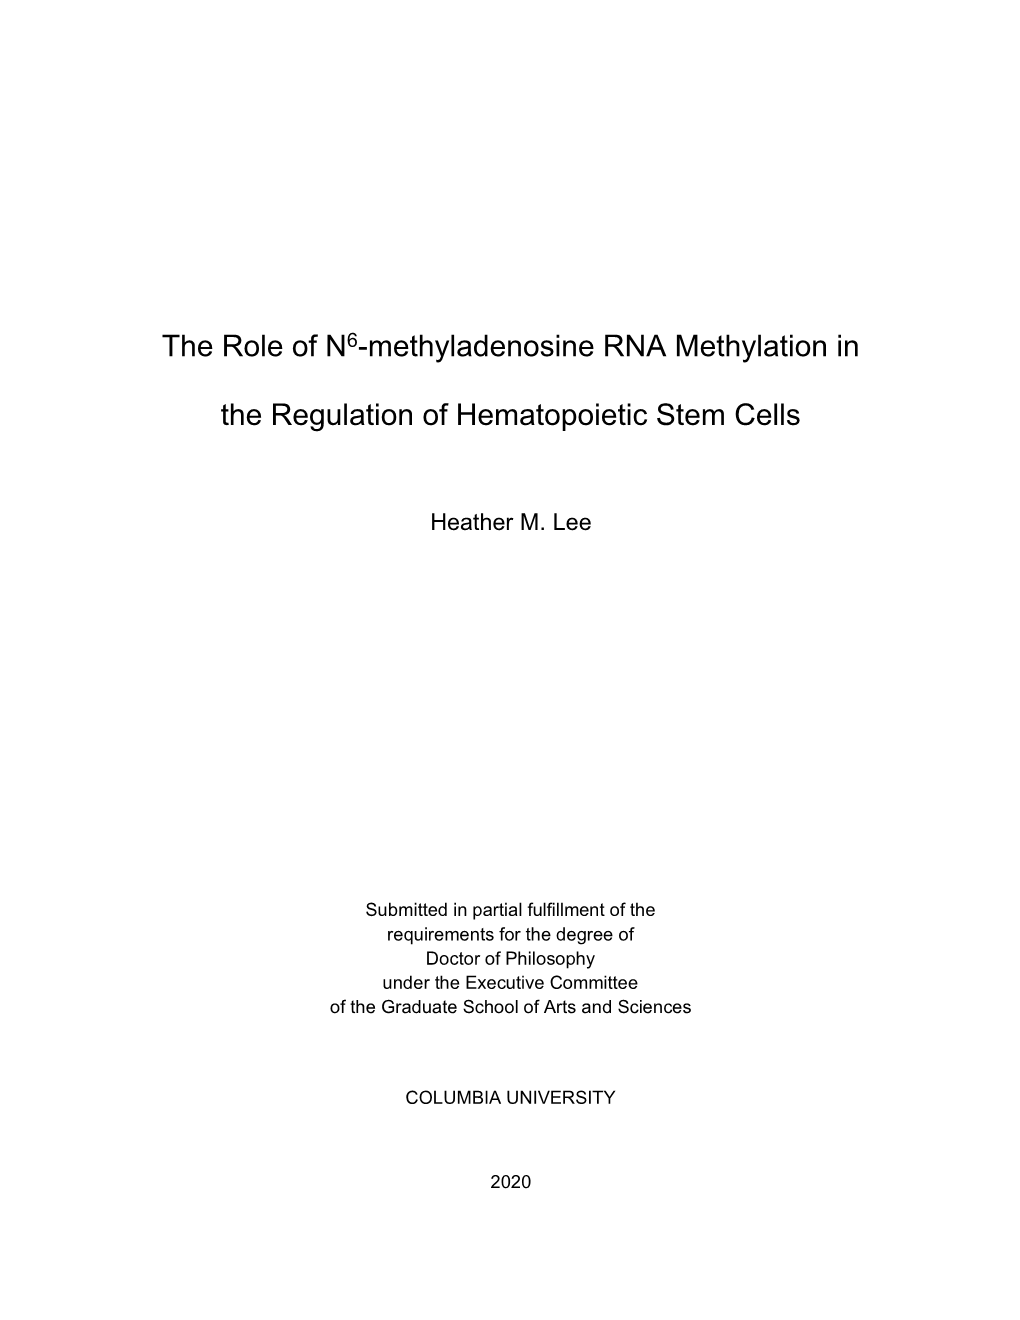 The Role of N6-Methyladenosine RNA Methylation in the Regulation Of